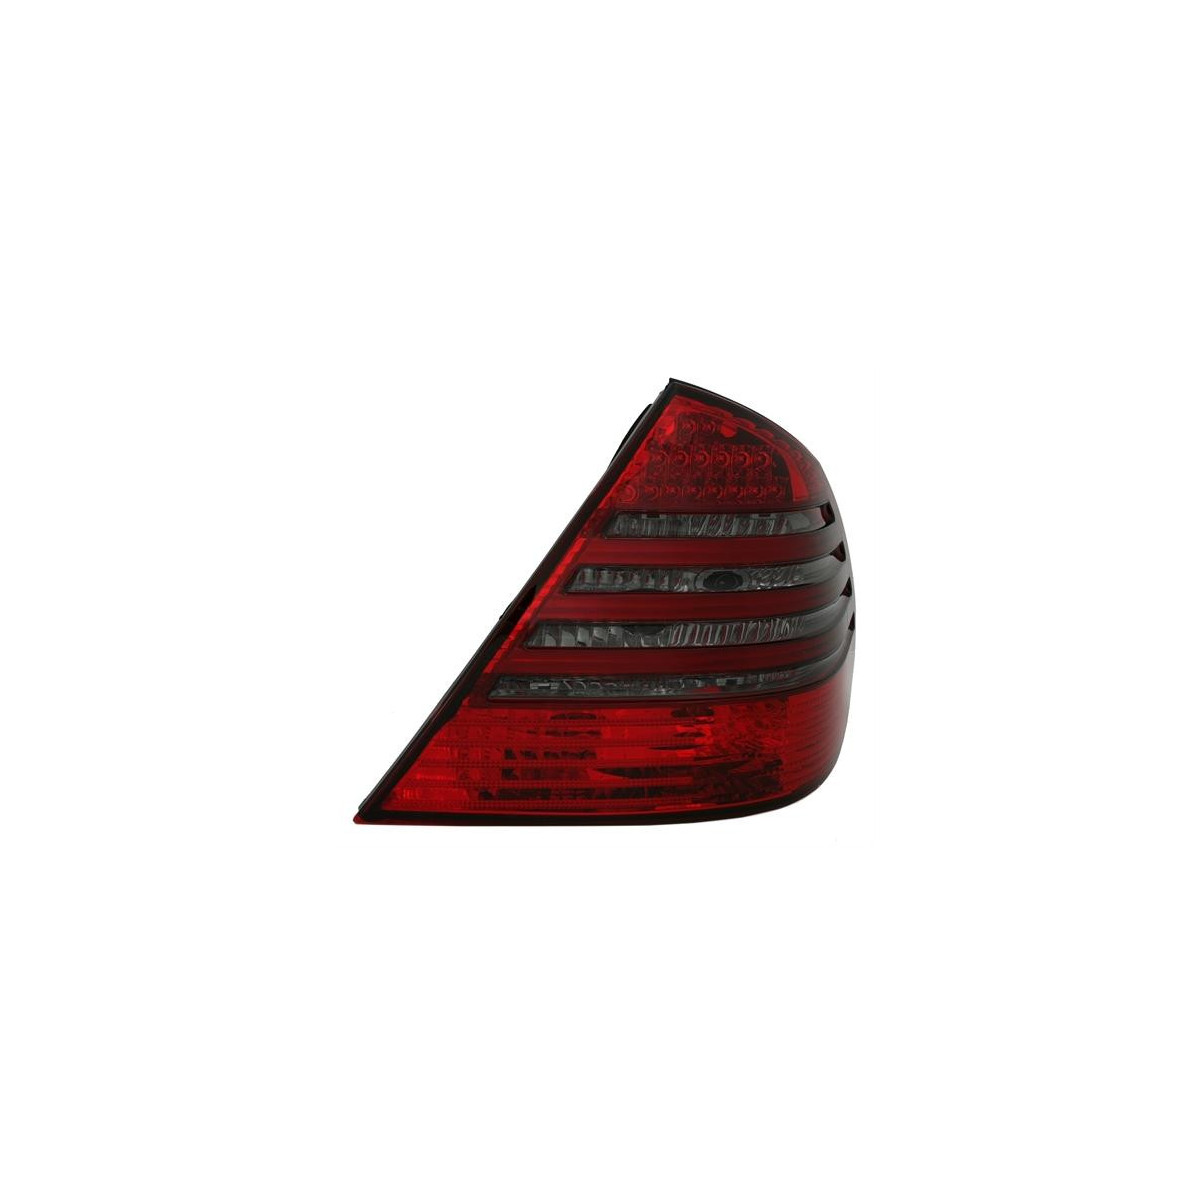 LAMPY TYLNE LED MERDEDES W211 02-06 LIMUZYNEA RED BLACK